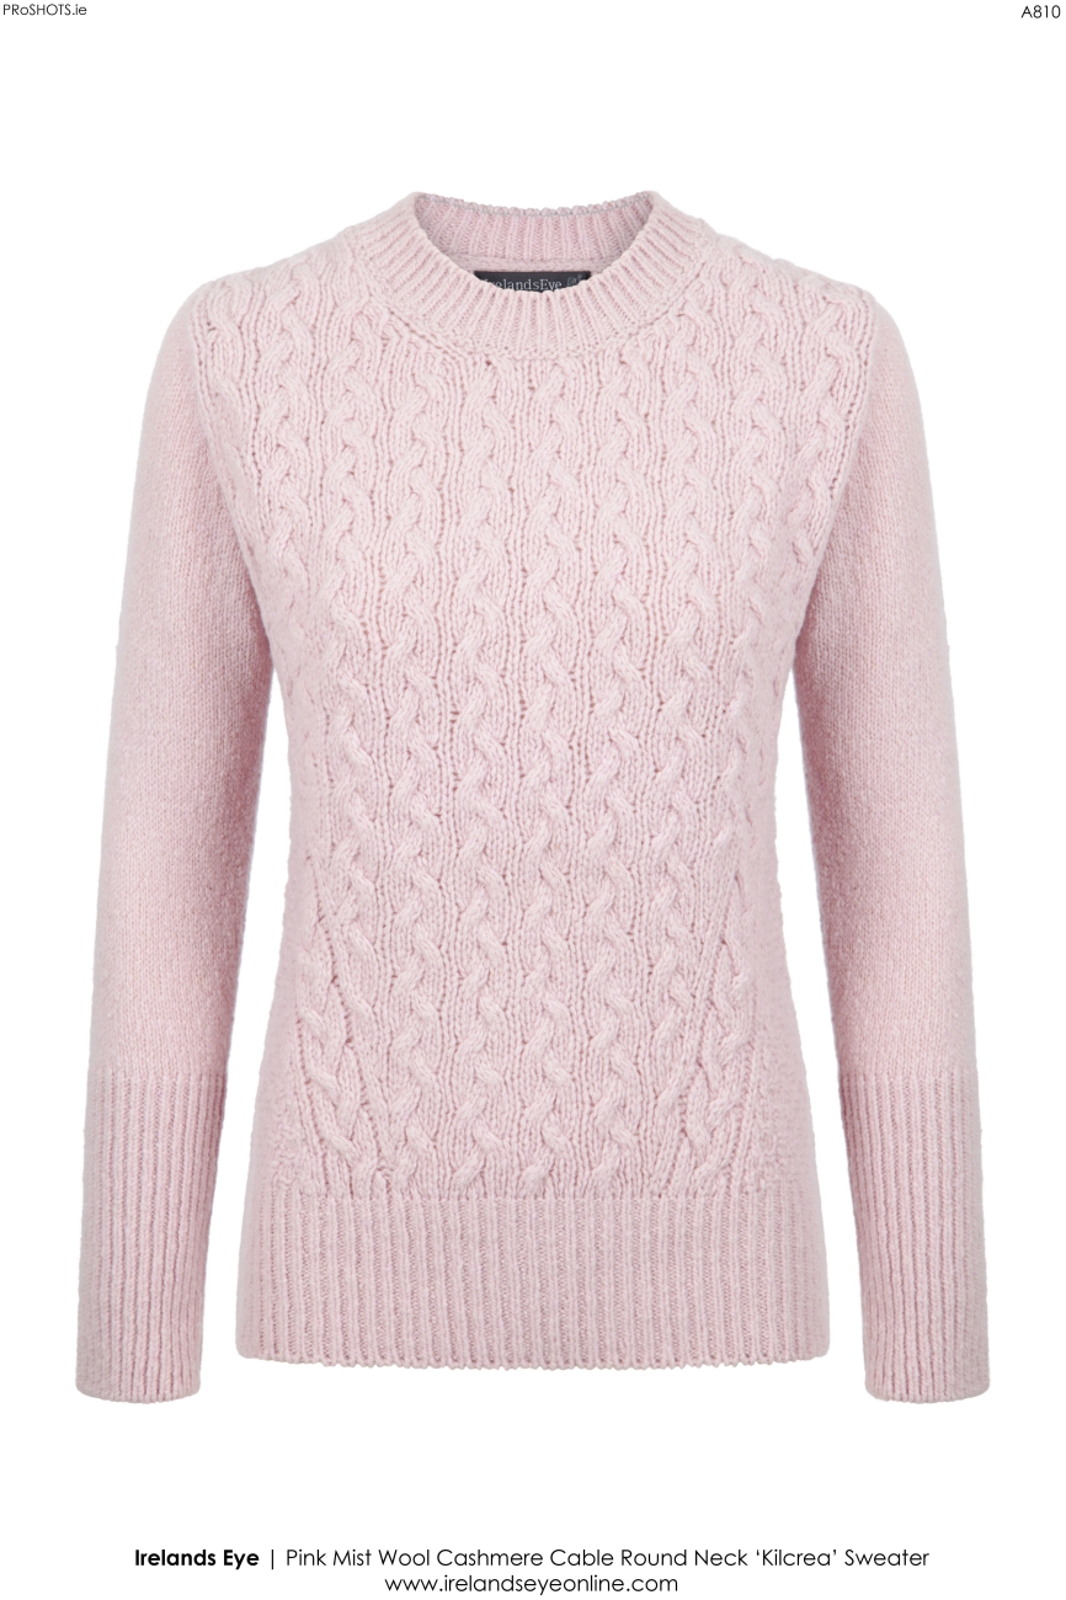 Irelands Eye Kilcrea Sweater in Pink Mist - the Old Byre Showroom